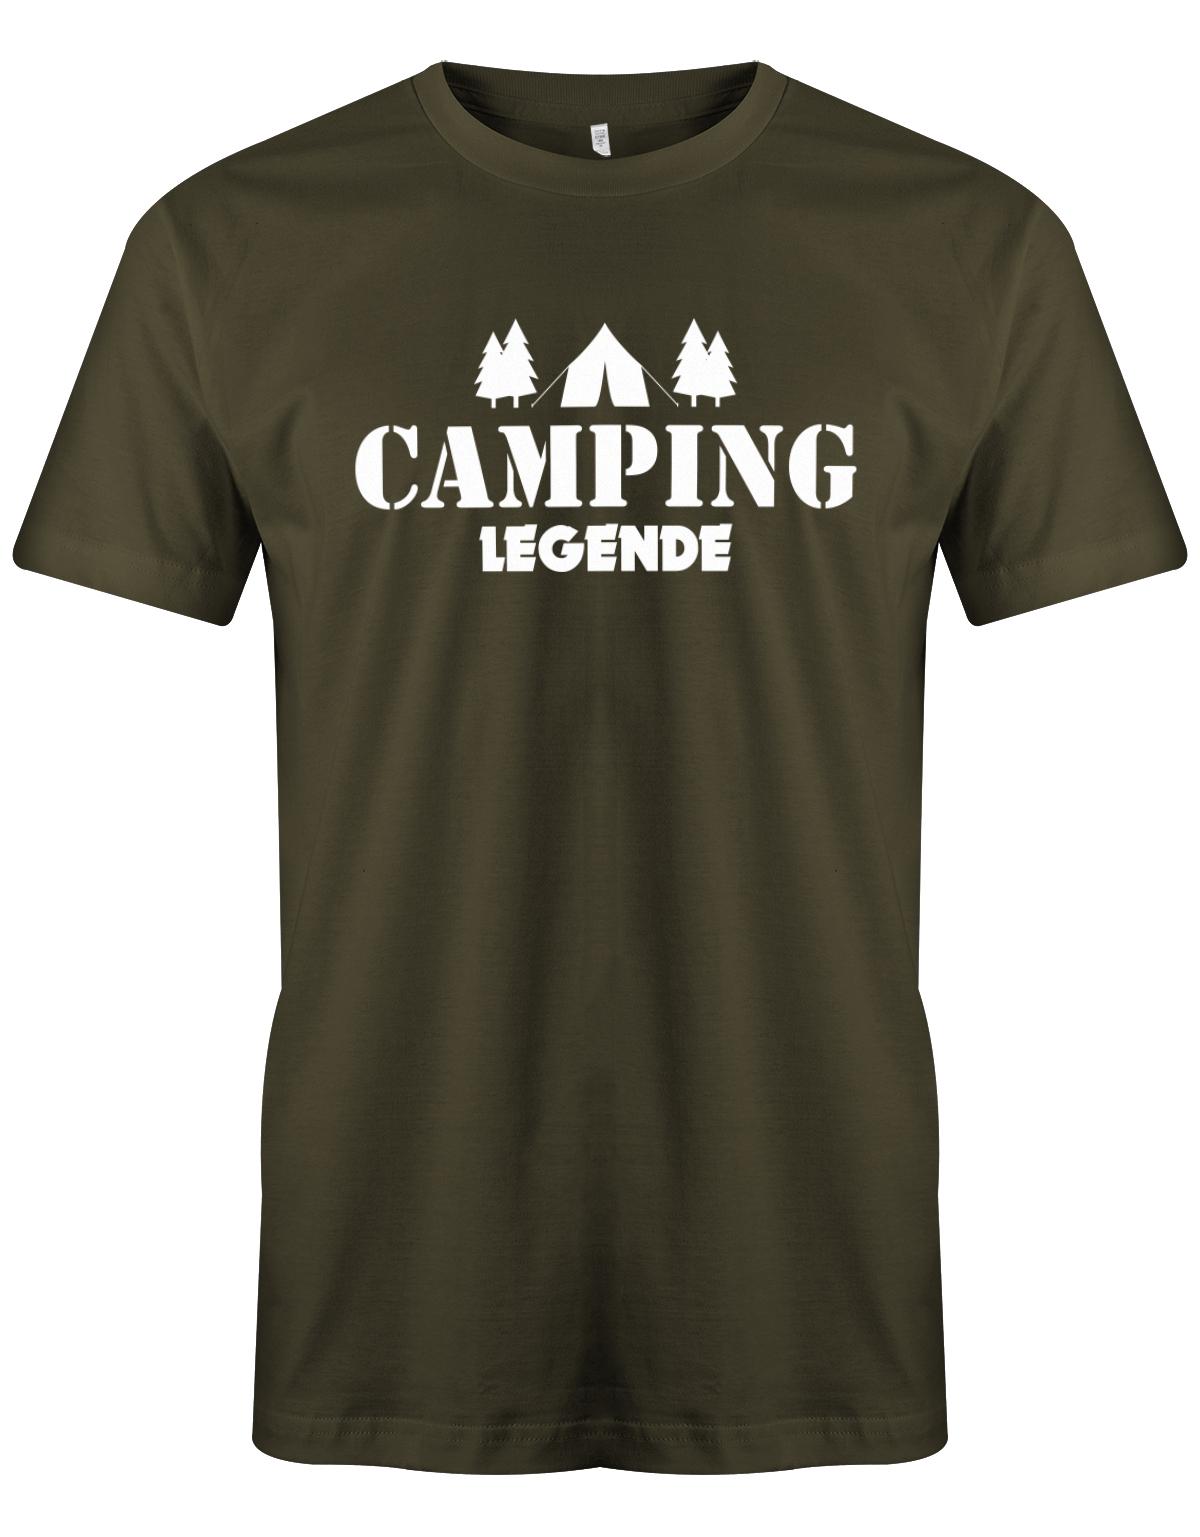 Camping-Legende-Herren-Shirt-army